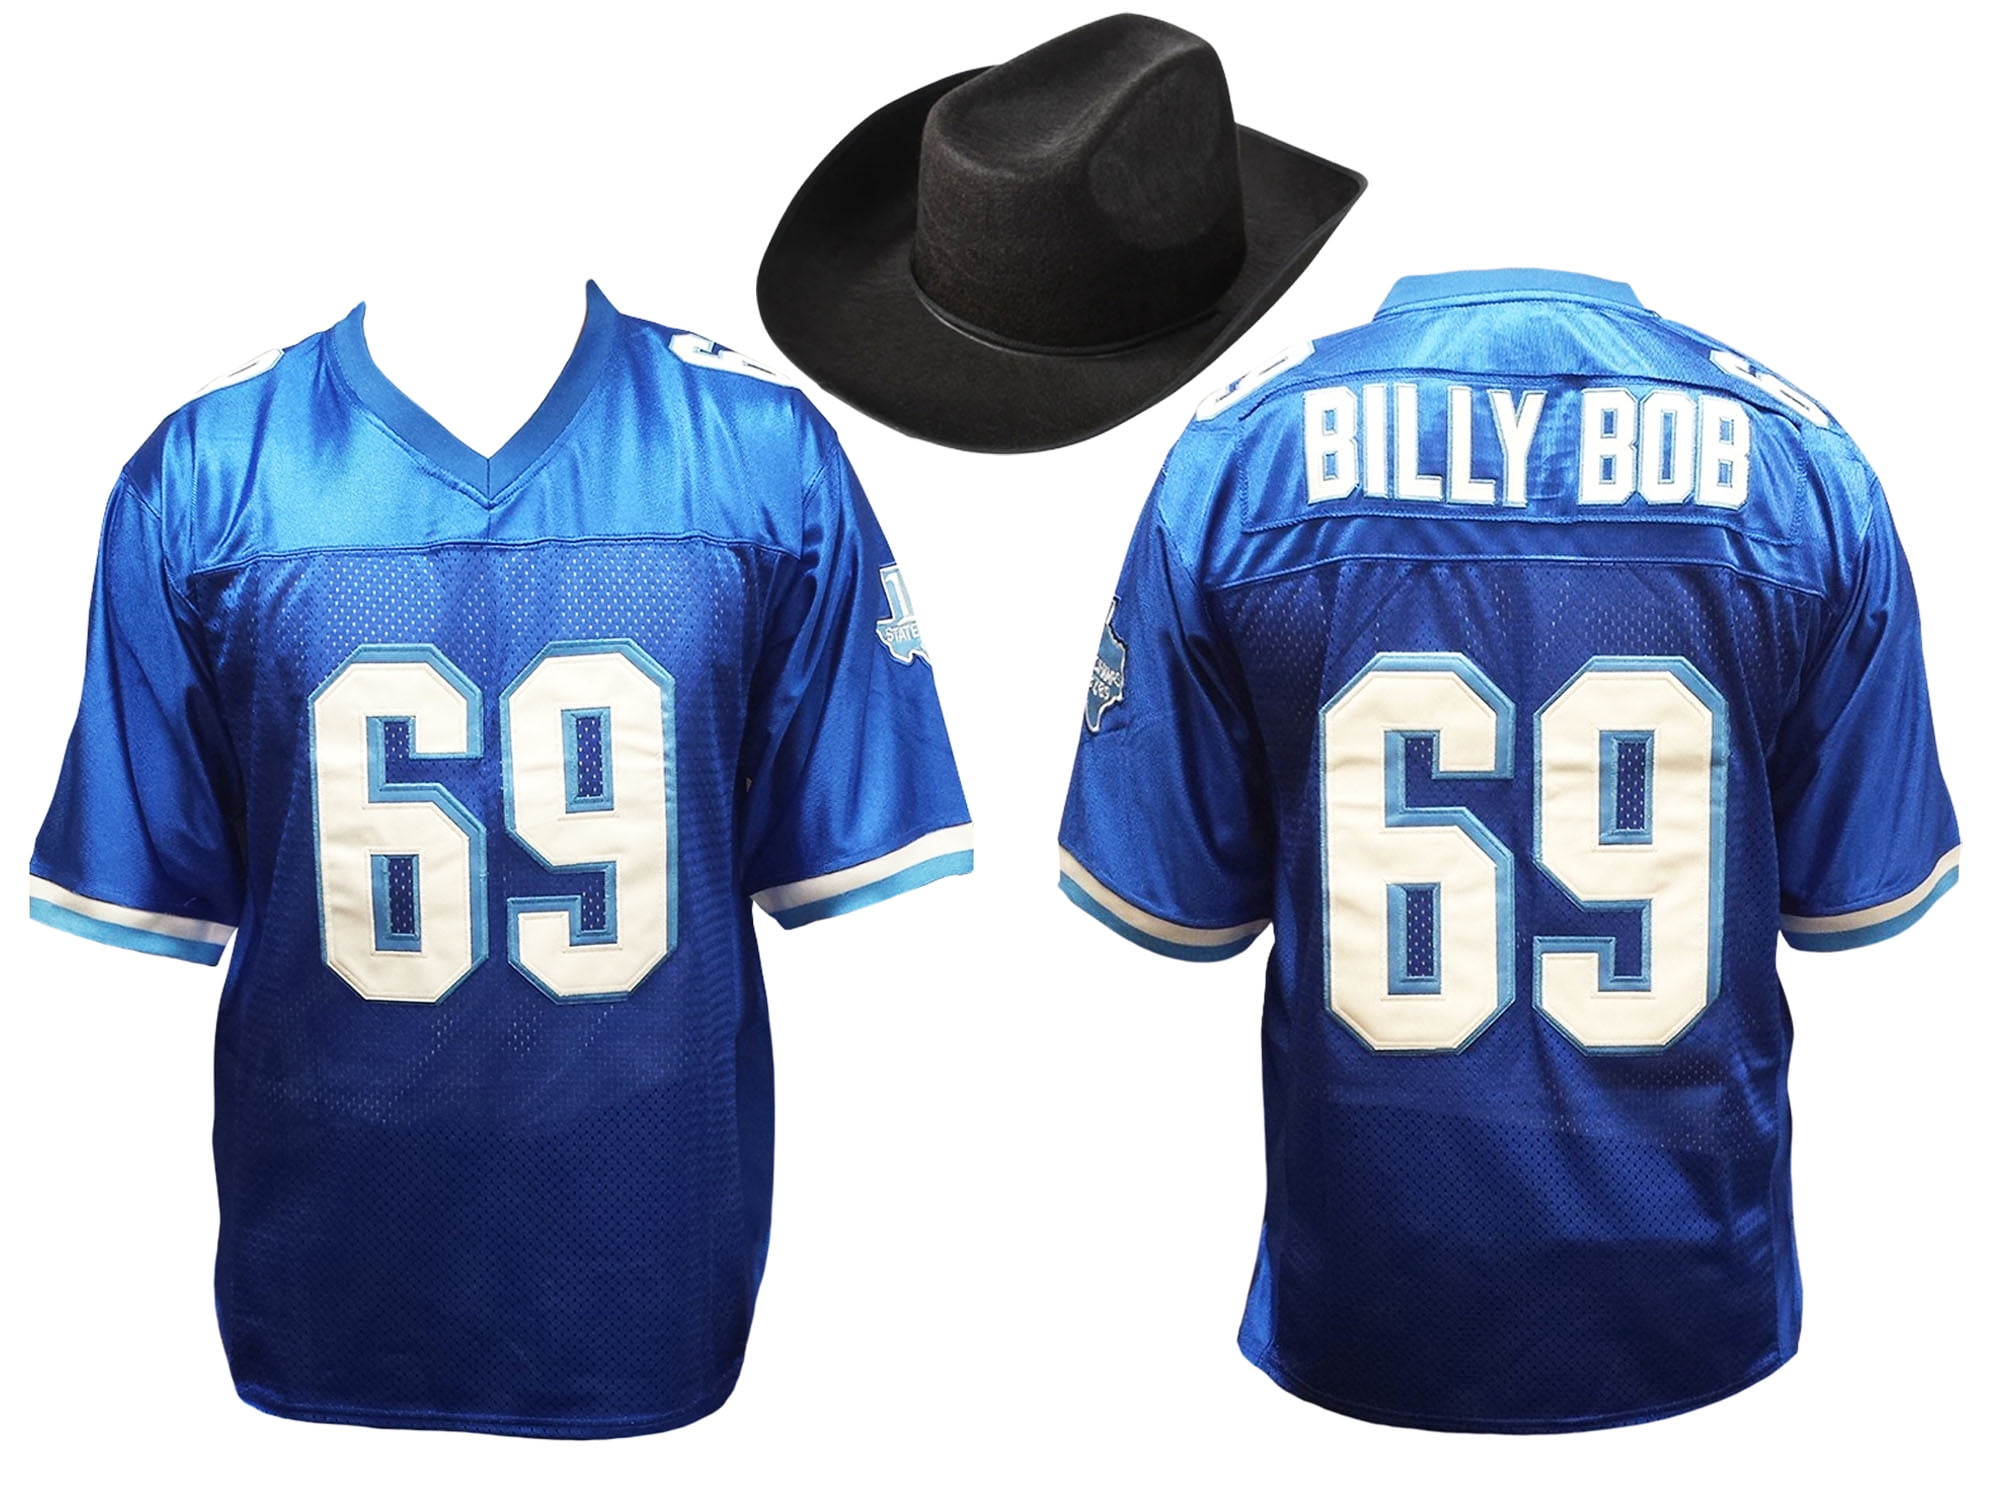 Billy Bob's Blues